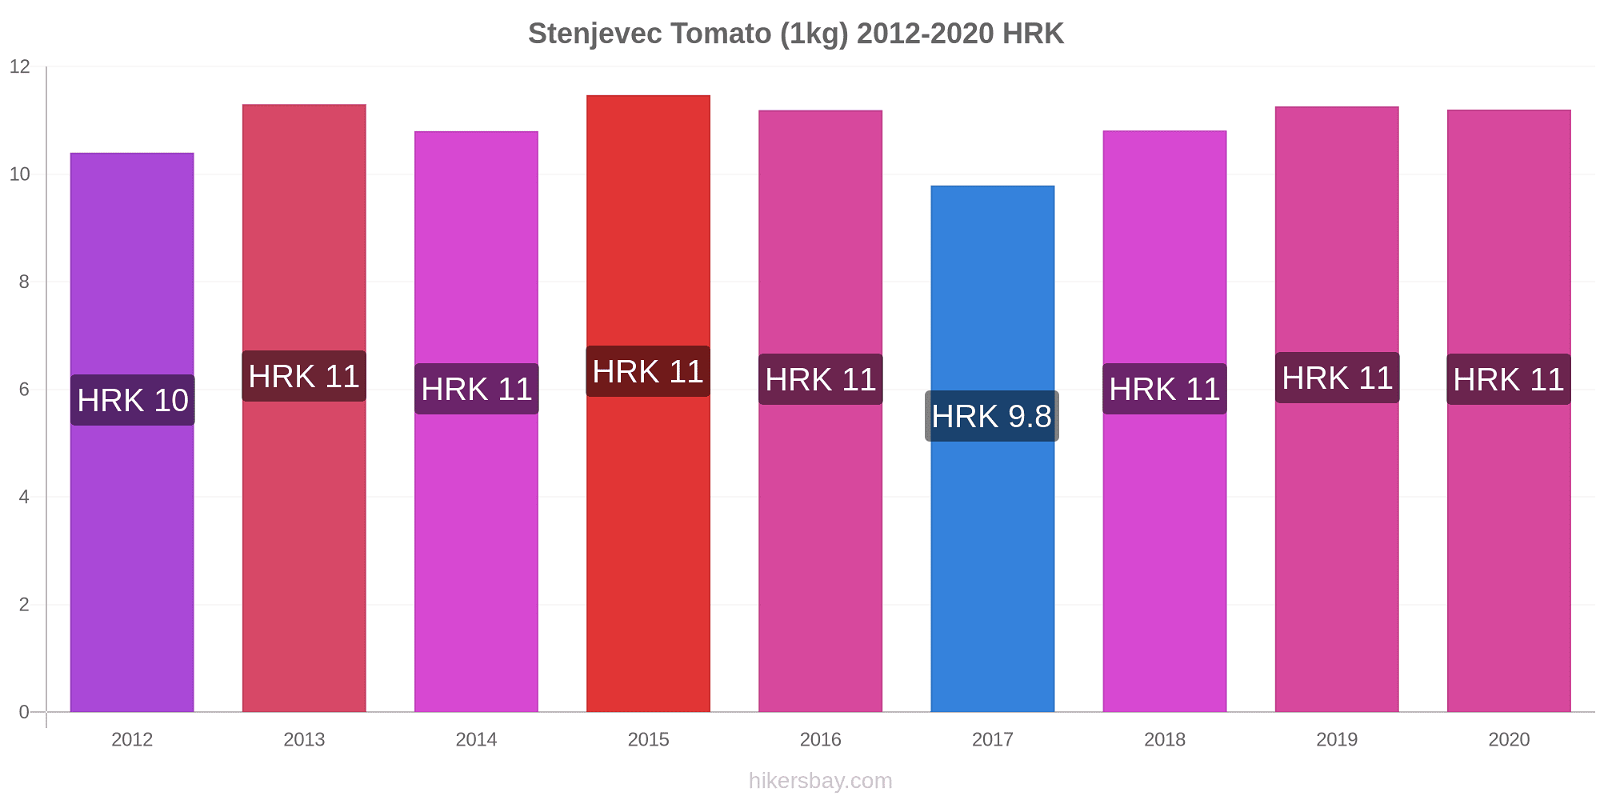 Stenjevec price changes Tomato (1kg) hikersbay.com